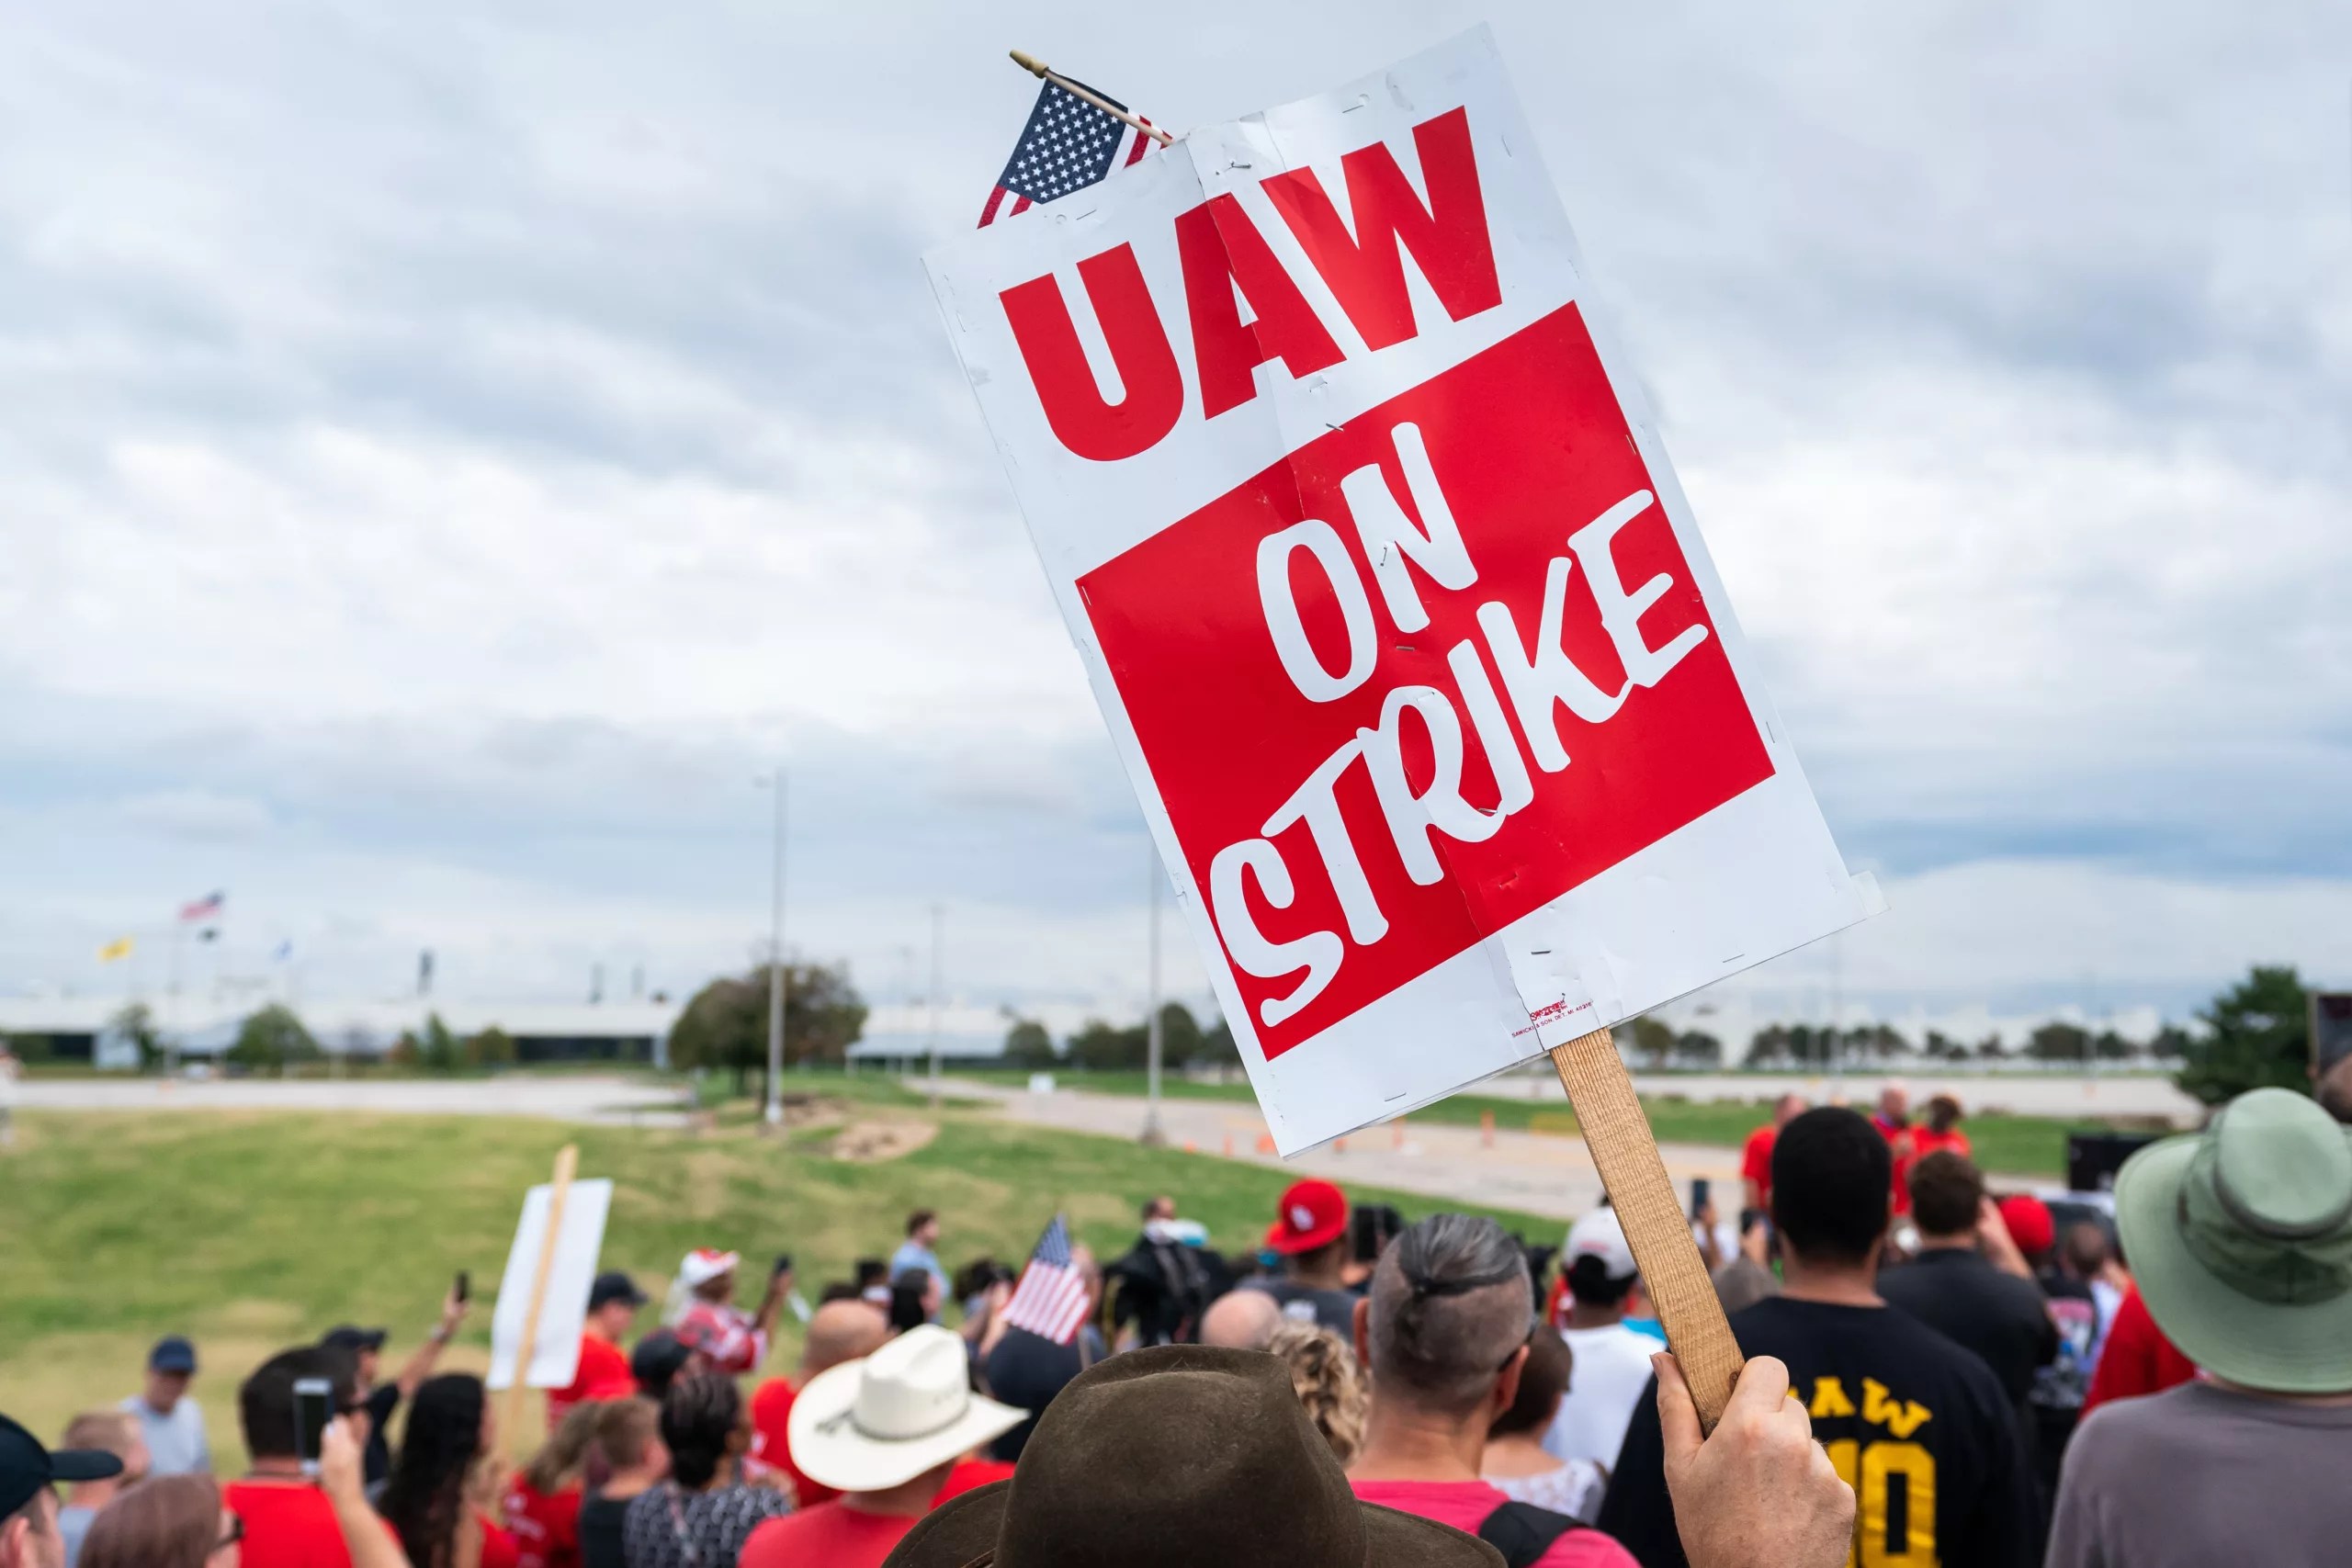 UAW strike